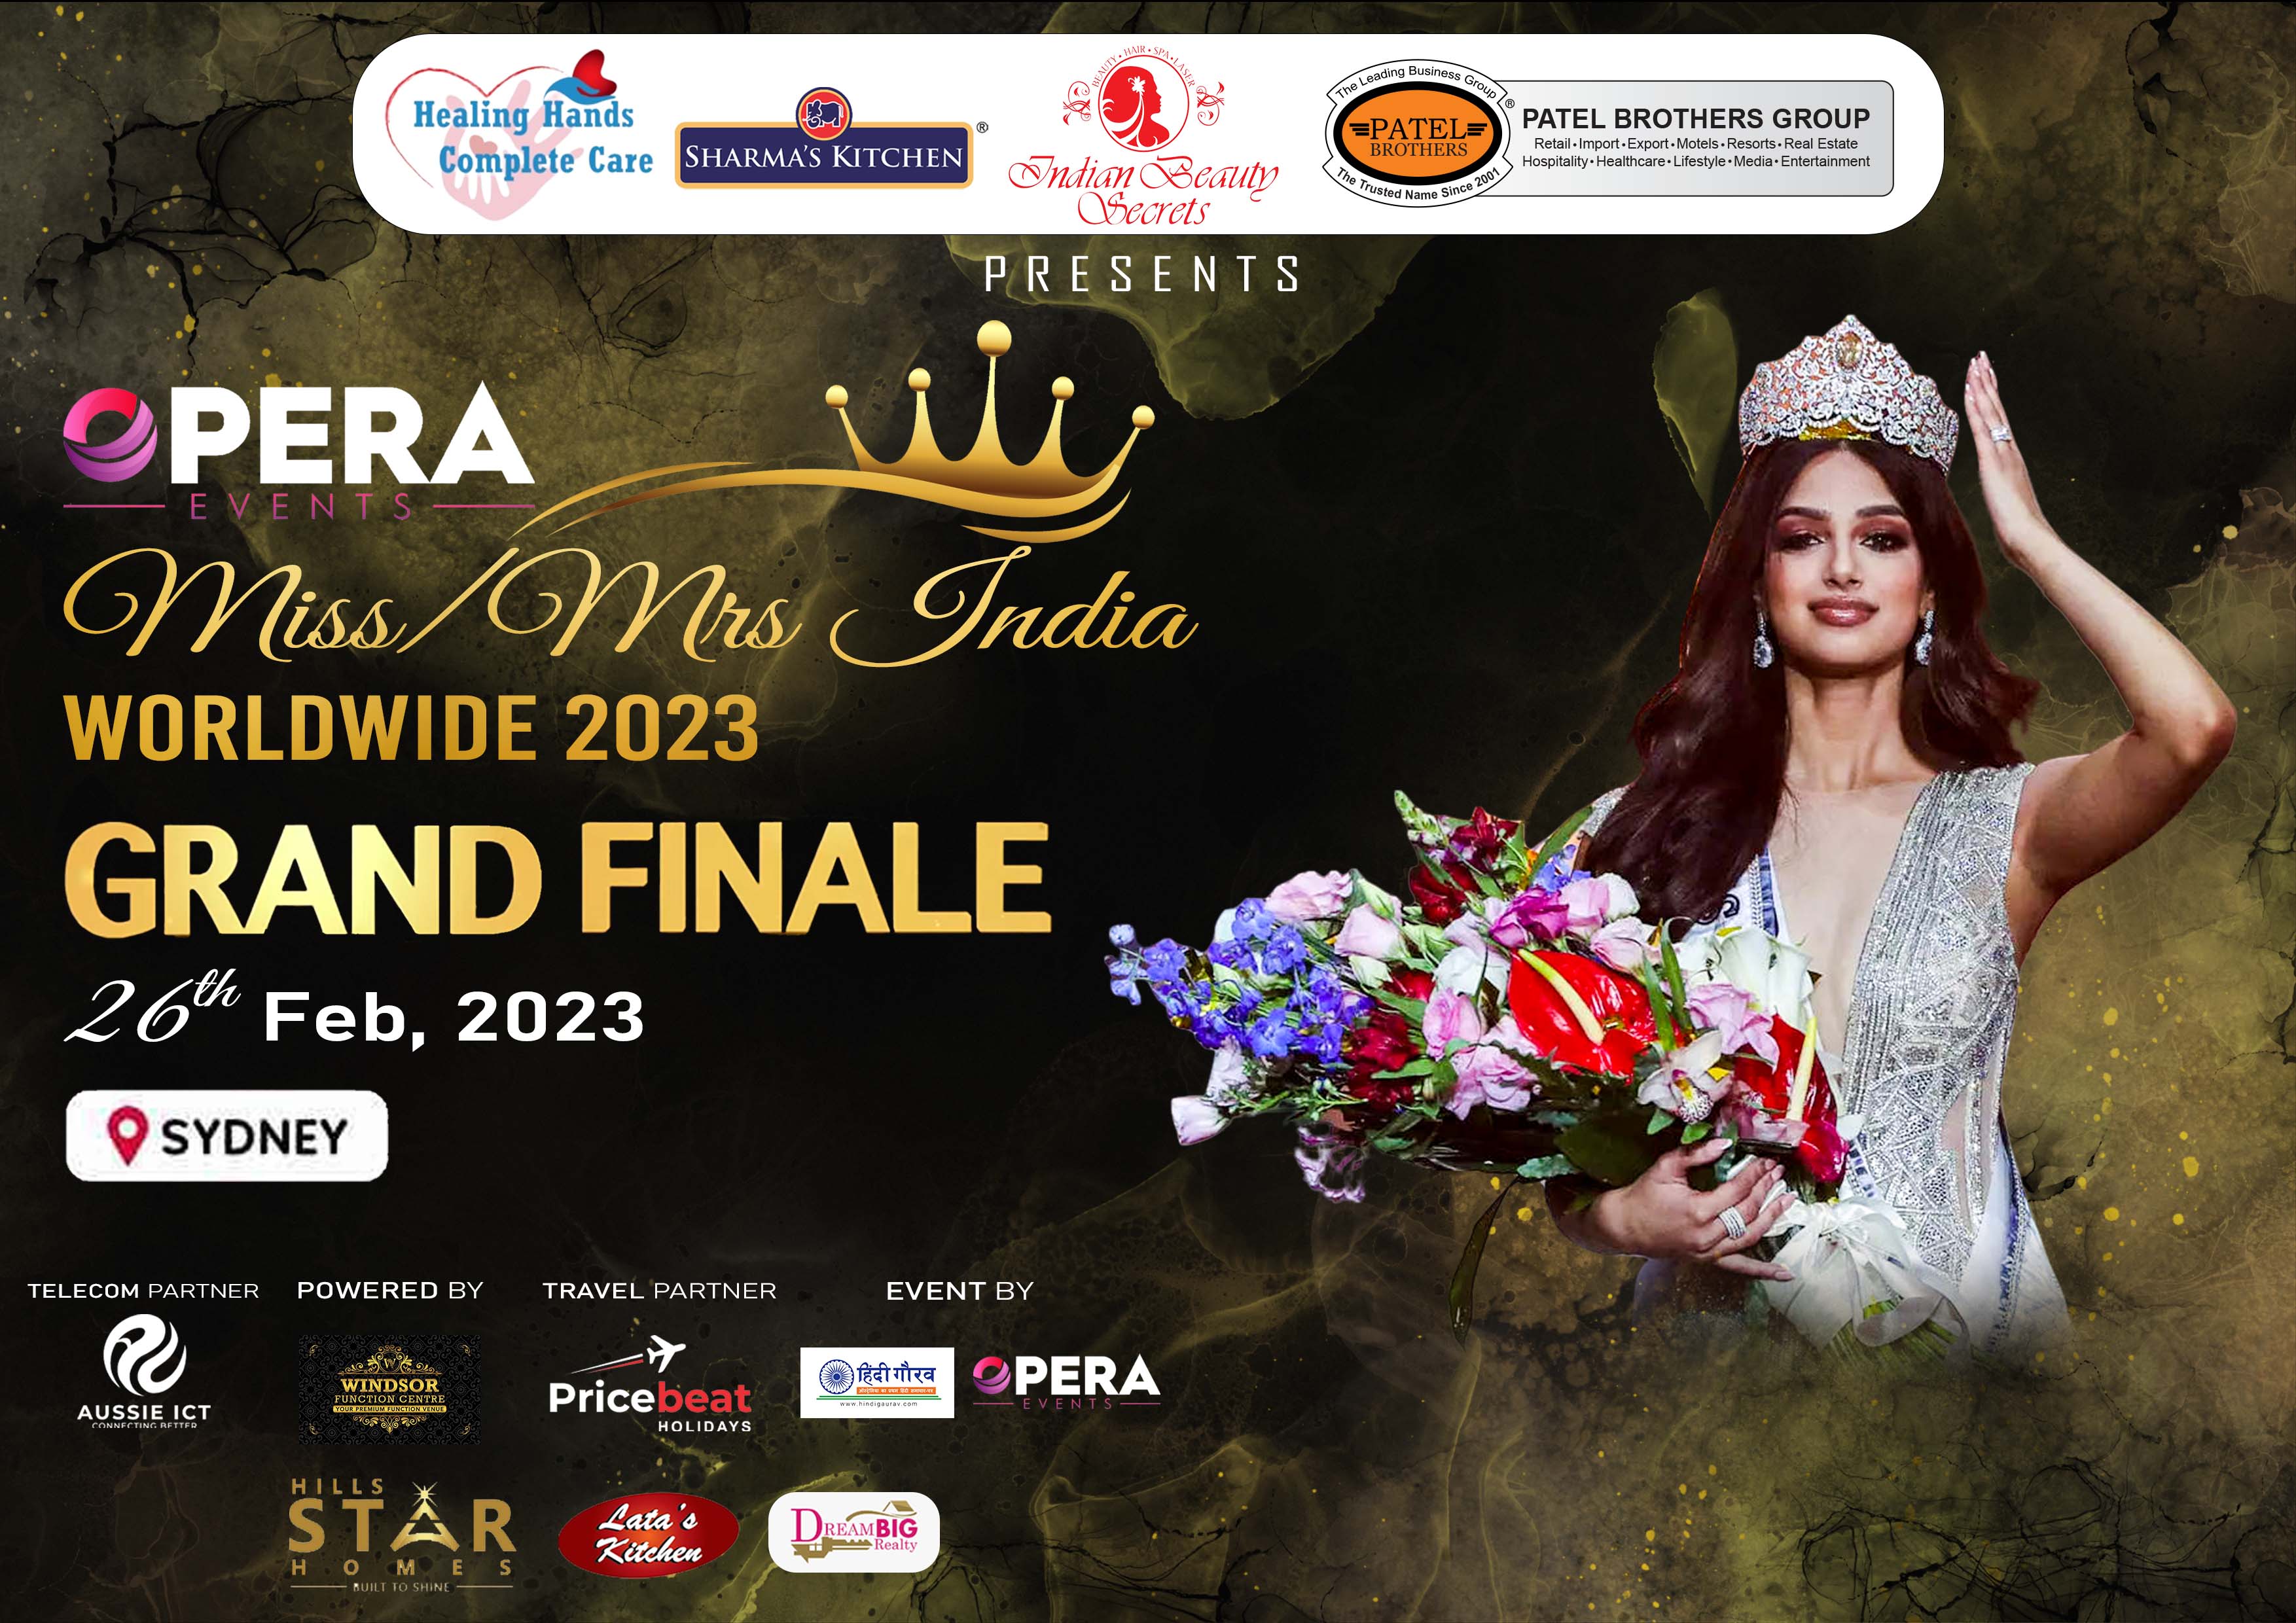  Opera Miss/Mrs India Worldwide 2022